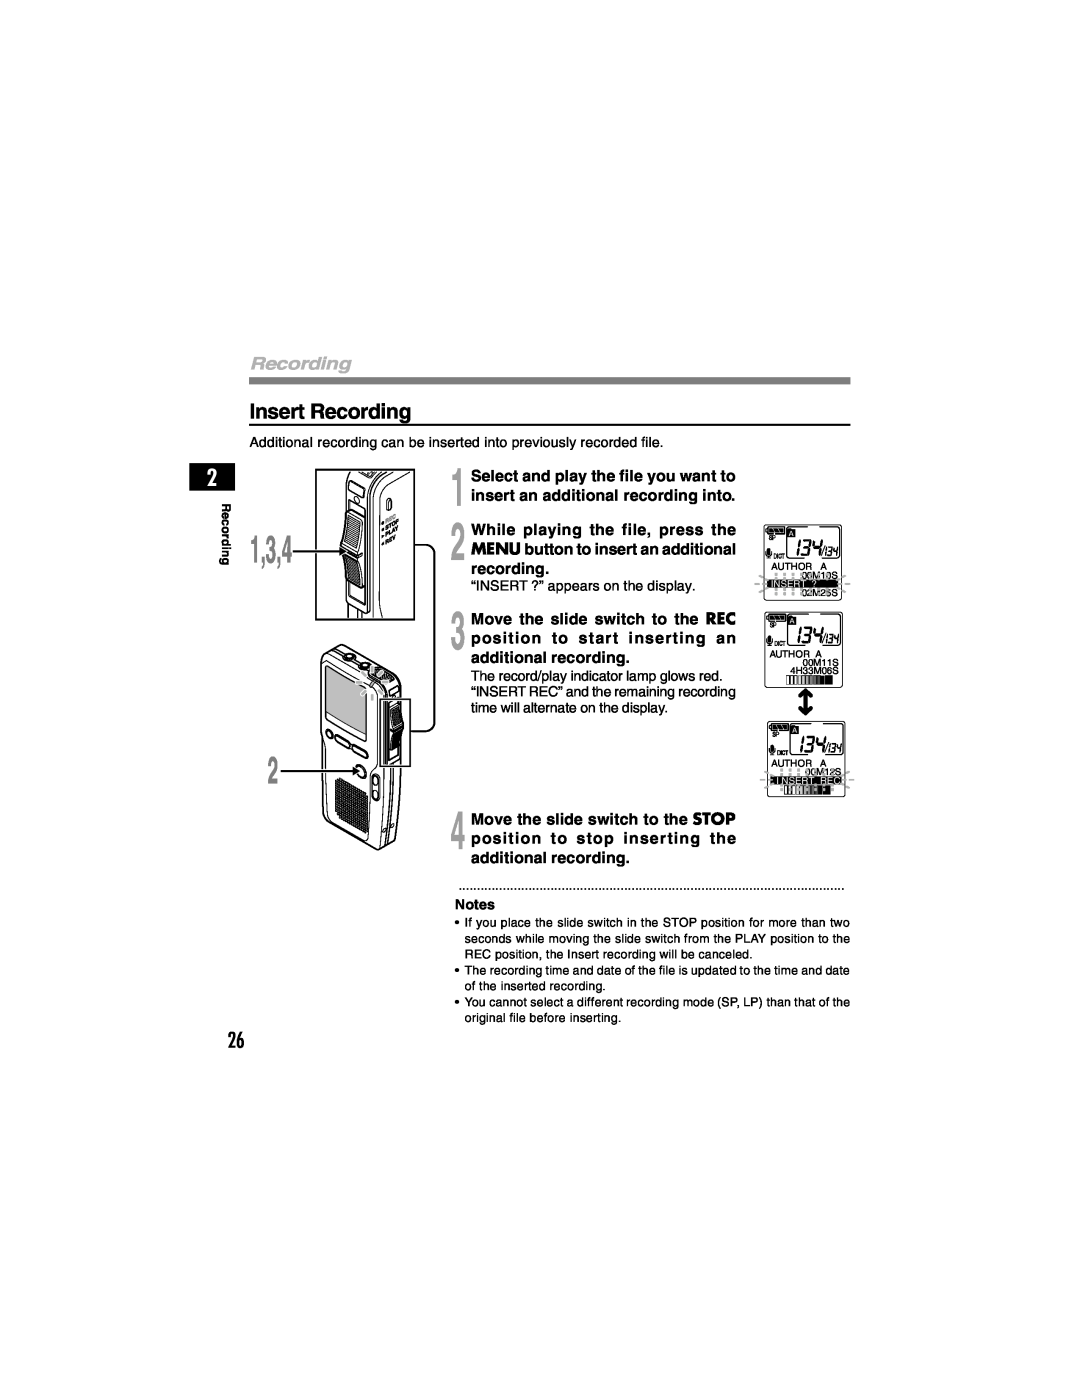 Olympus DS-4000 manual Insert Recording, 1,3,4 